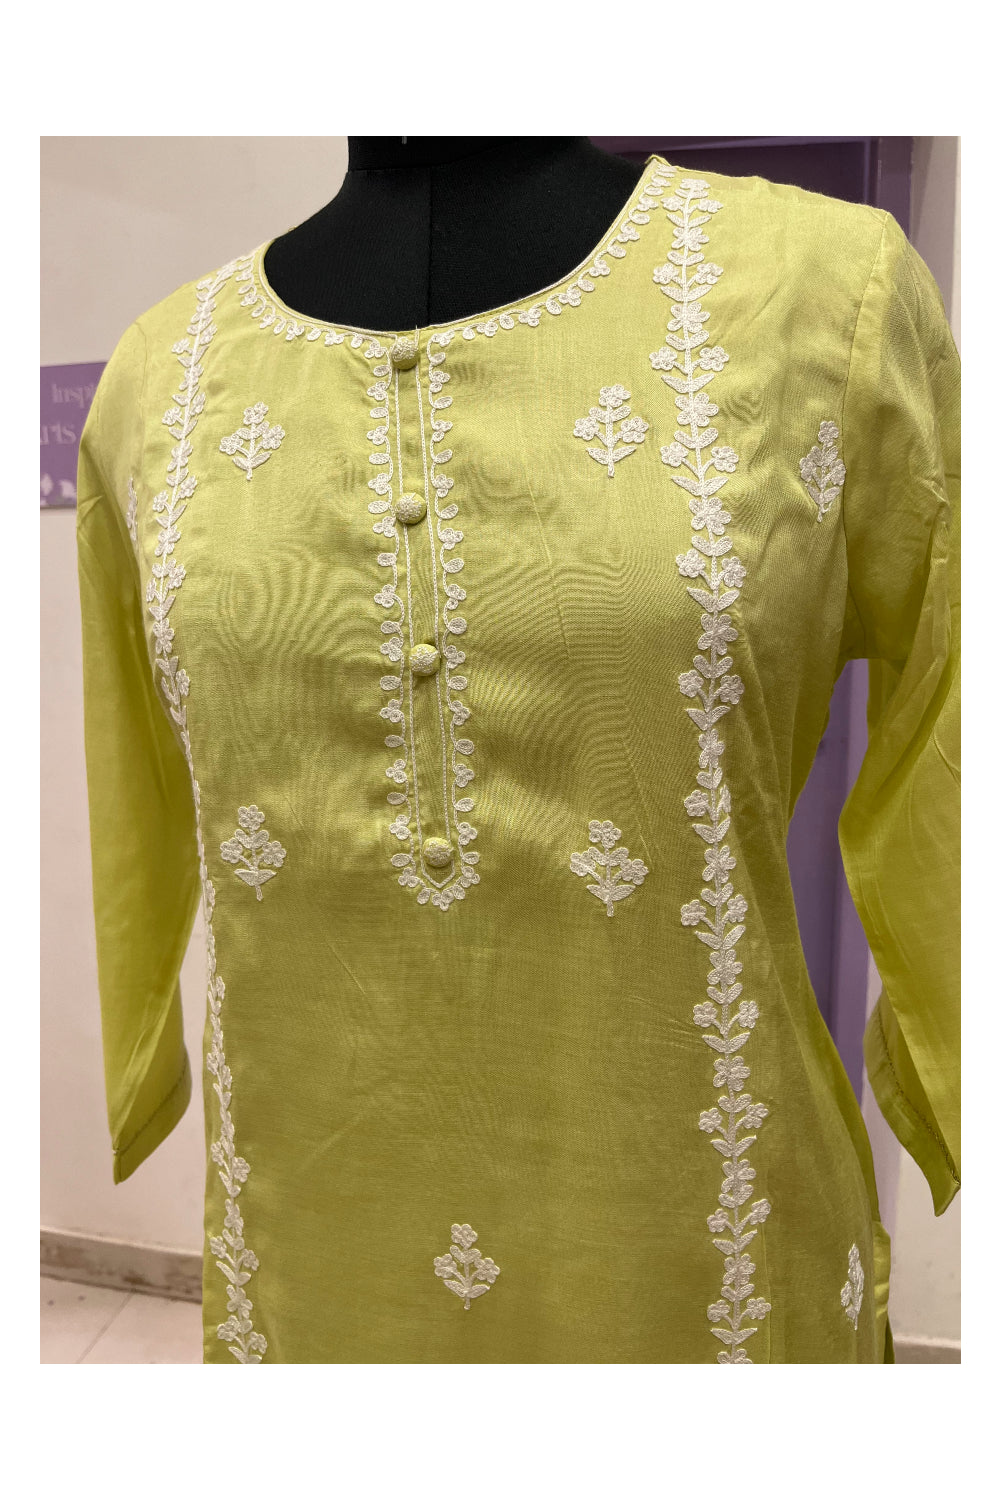 Southloom Stitched Semi Silk Light Green Salwar Set with Thread Works